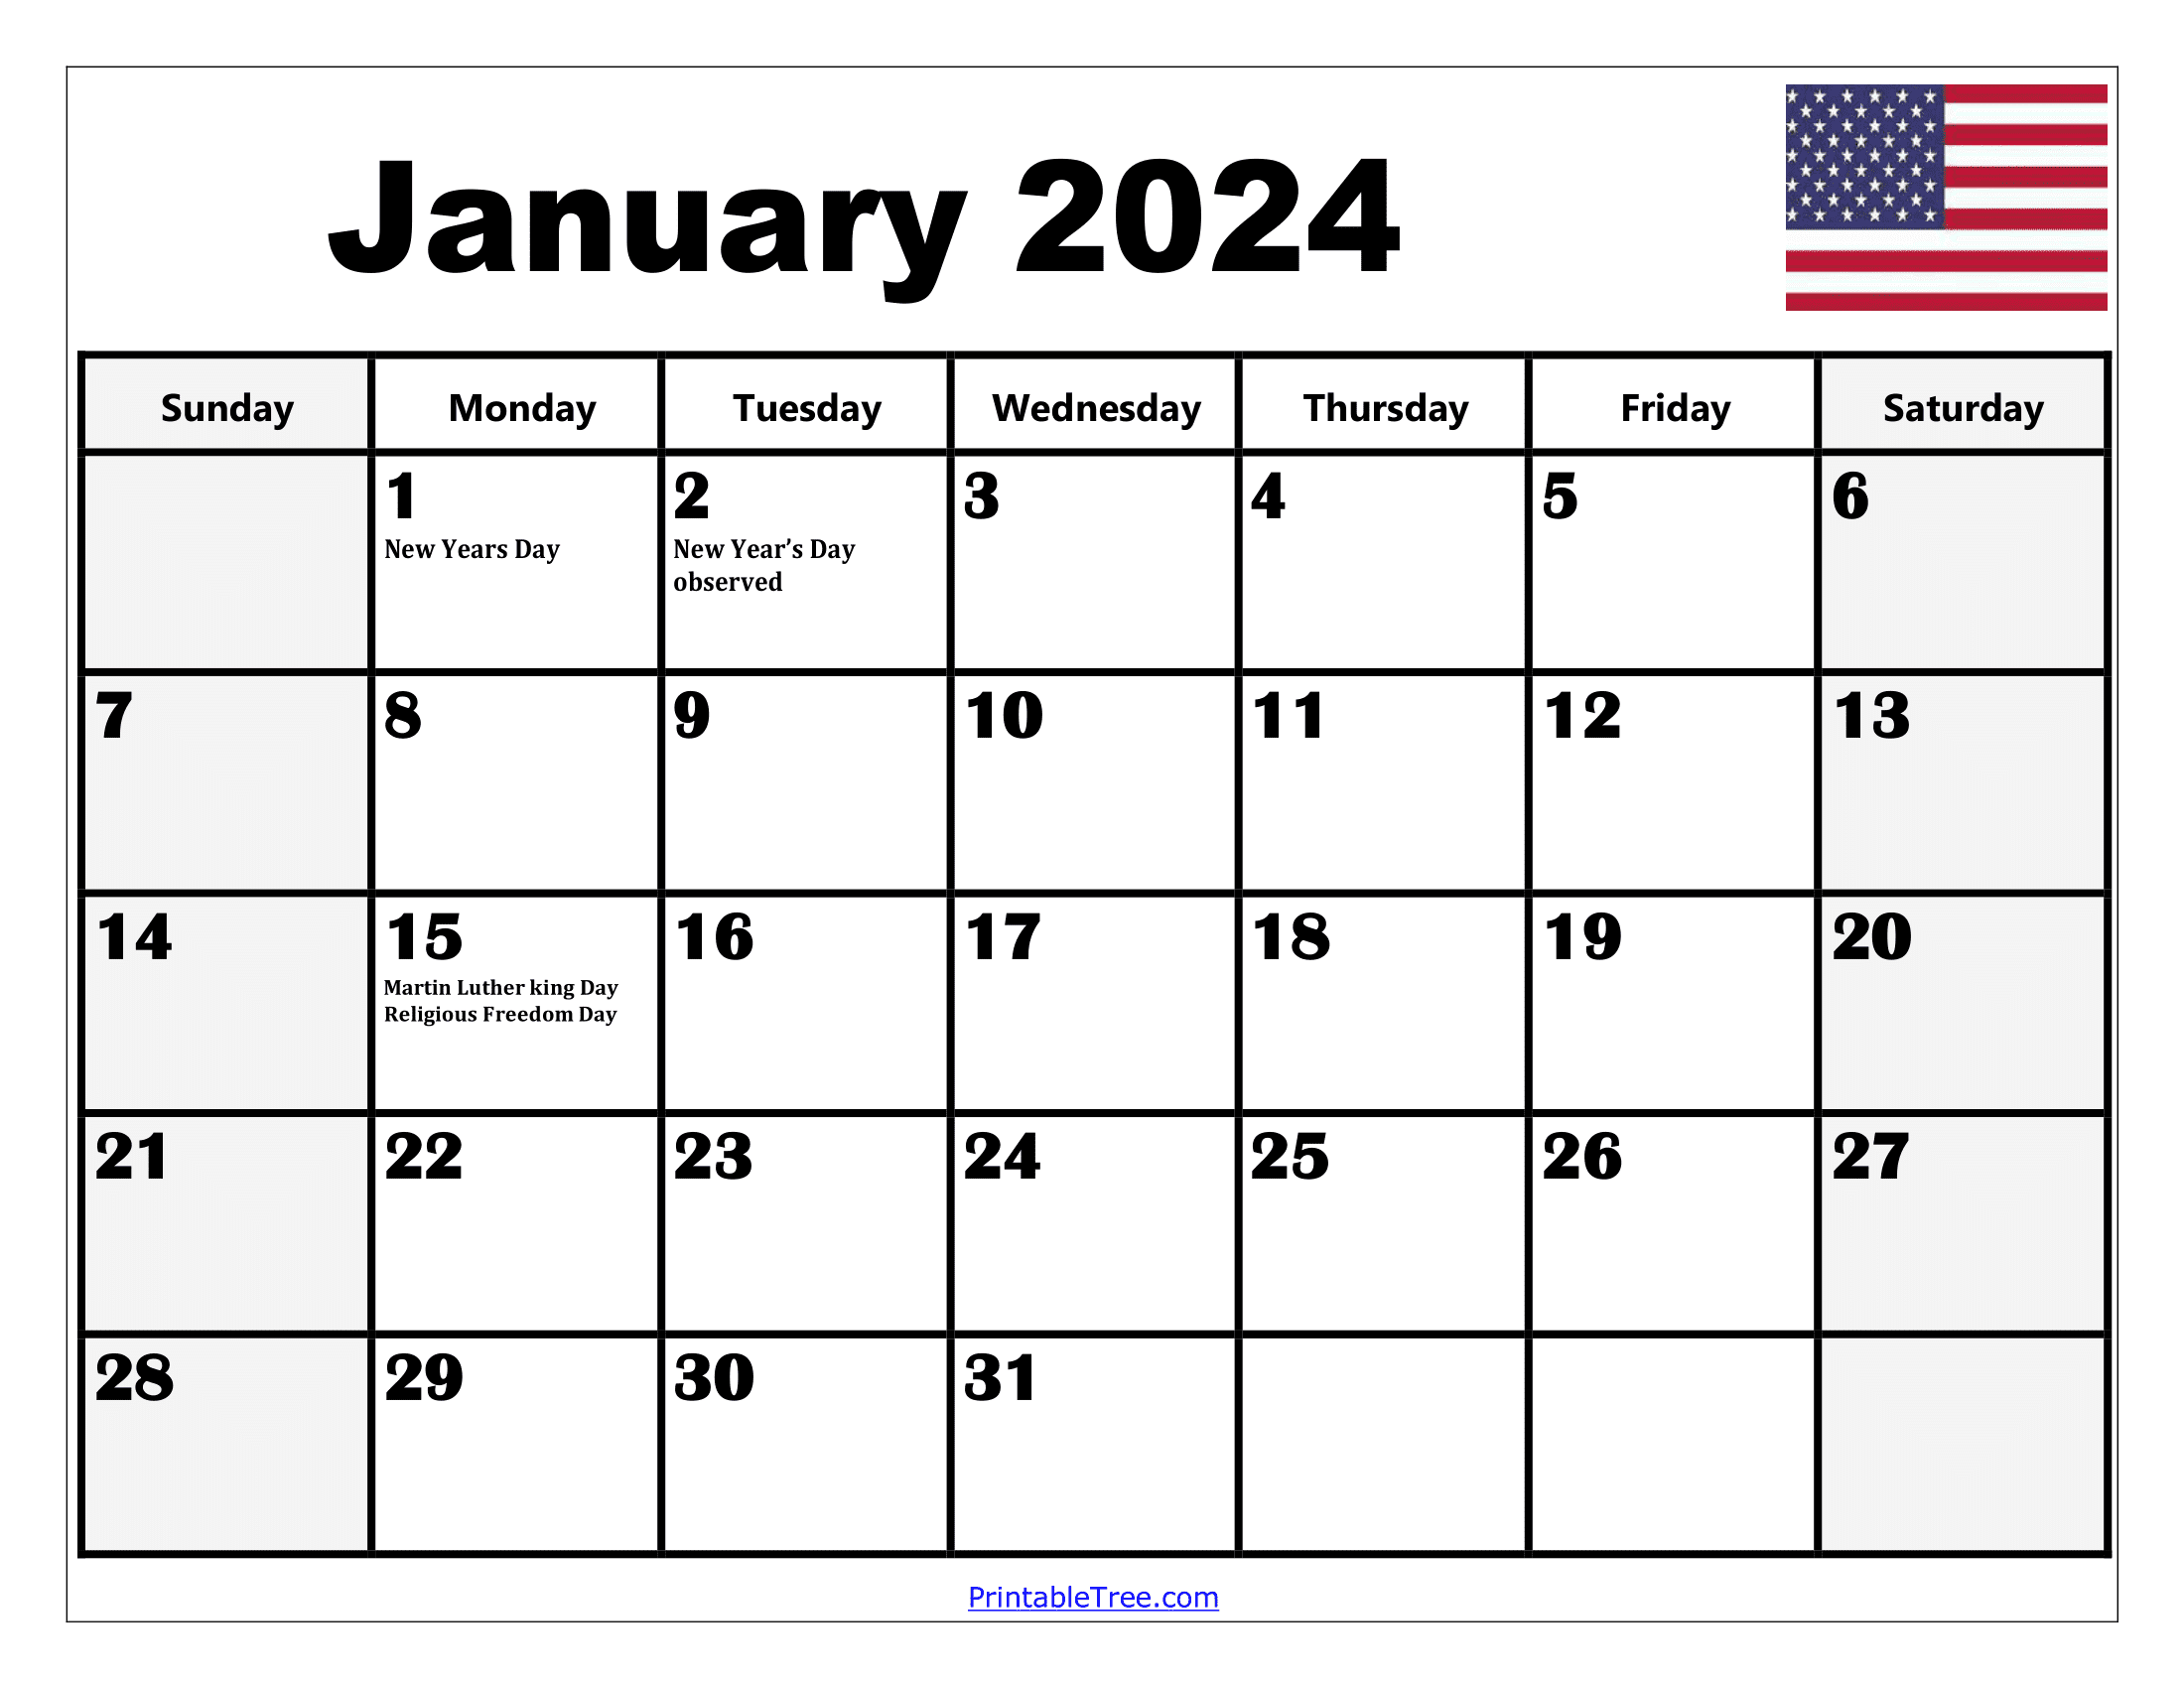 January 2024 Calendar Printable Pdf Template With Holidays for Printable Monthly 2024 Calendar With Holidays